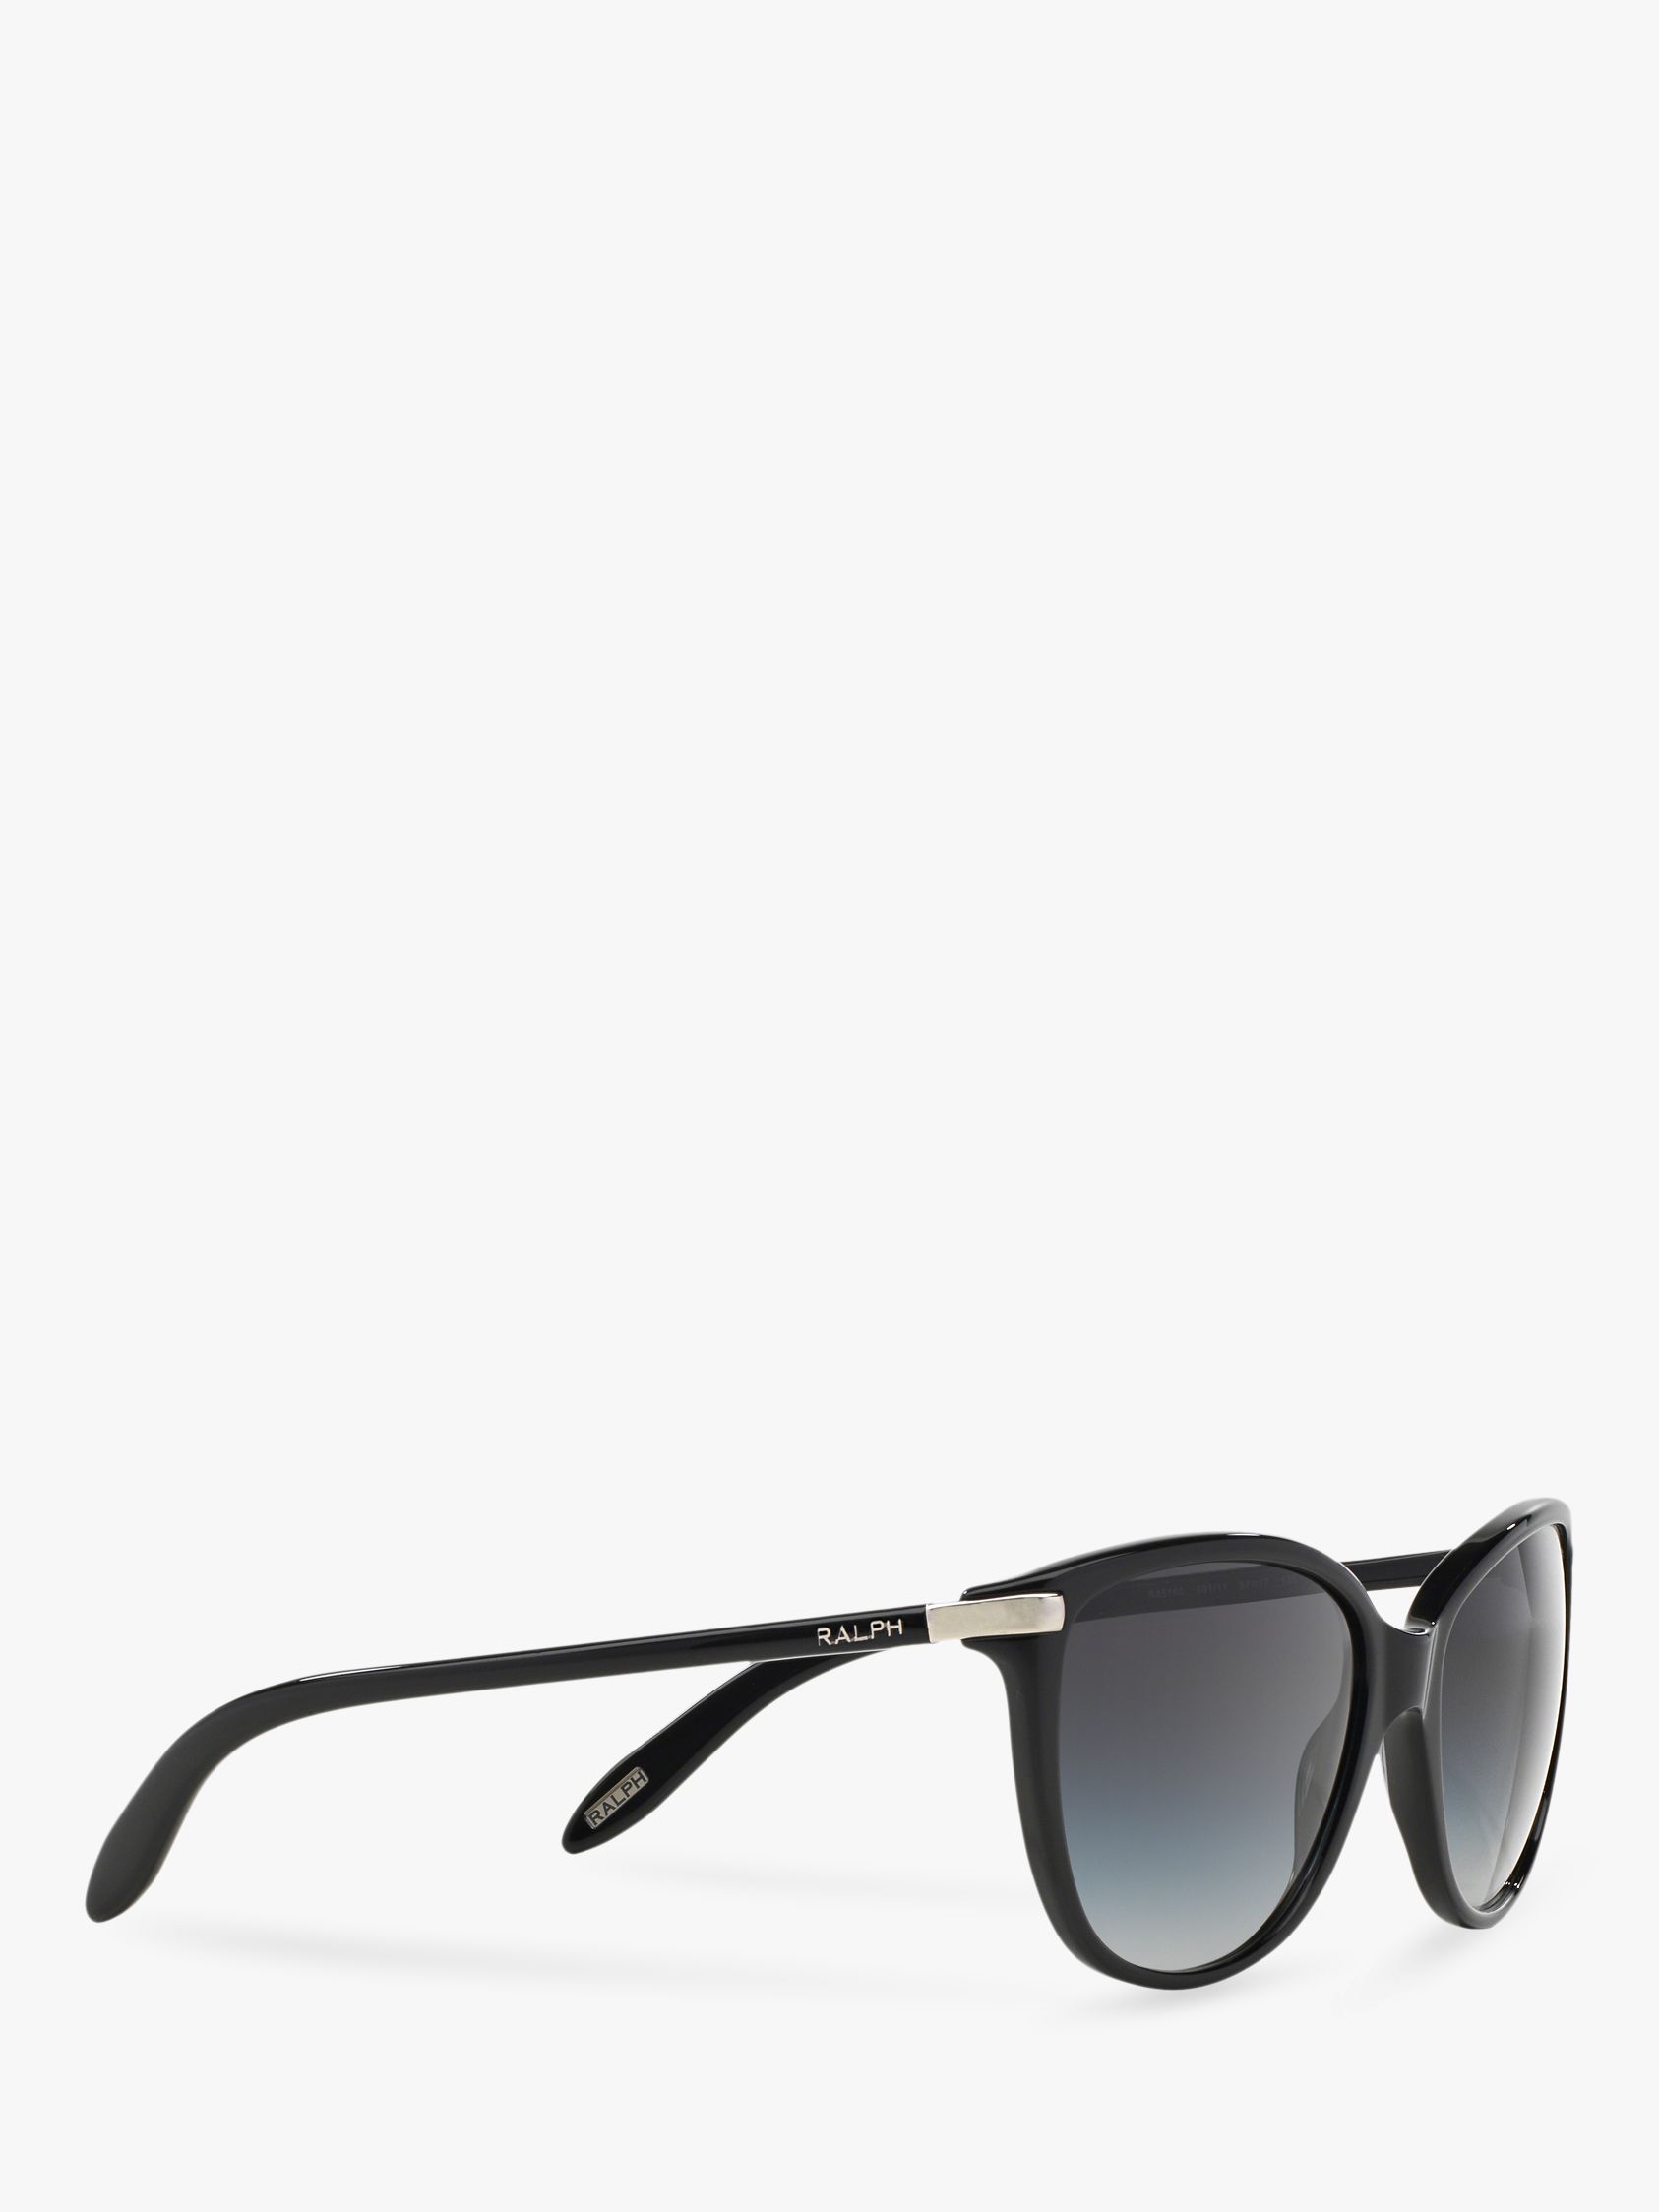 Polo Ralph Lauren RA5160 Women's Cat's Eye Sunglasses, Black/Grey